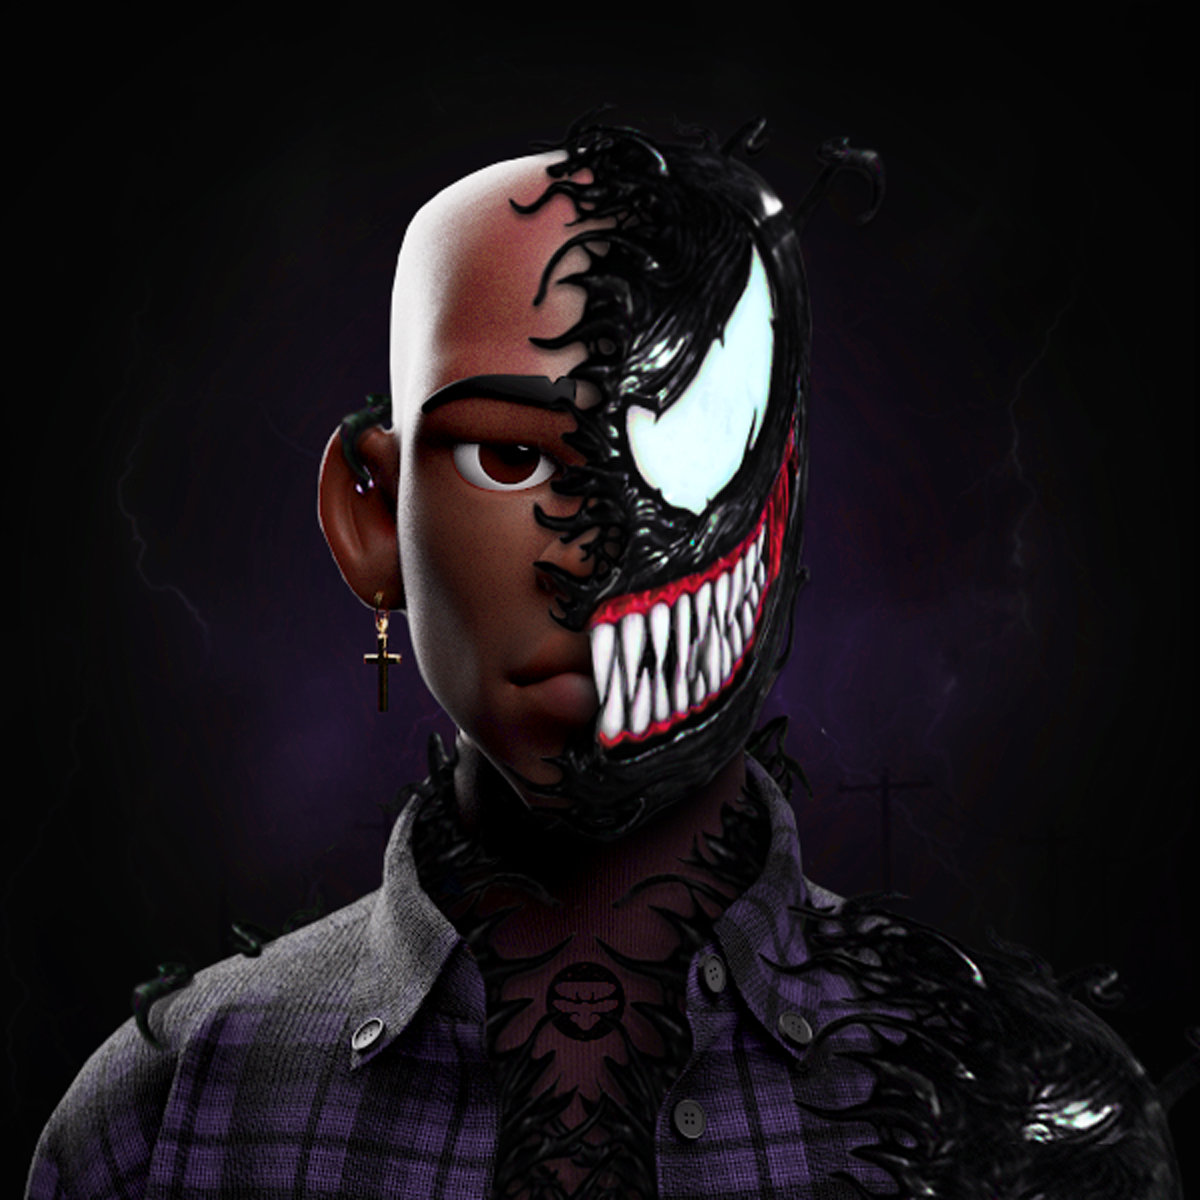 Spider-X-Venom-6 by OfficialGeezyart on DeviantArt